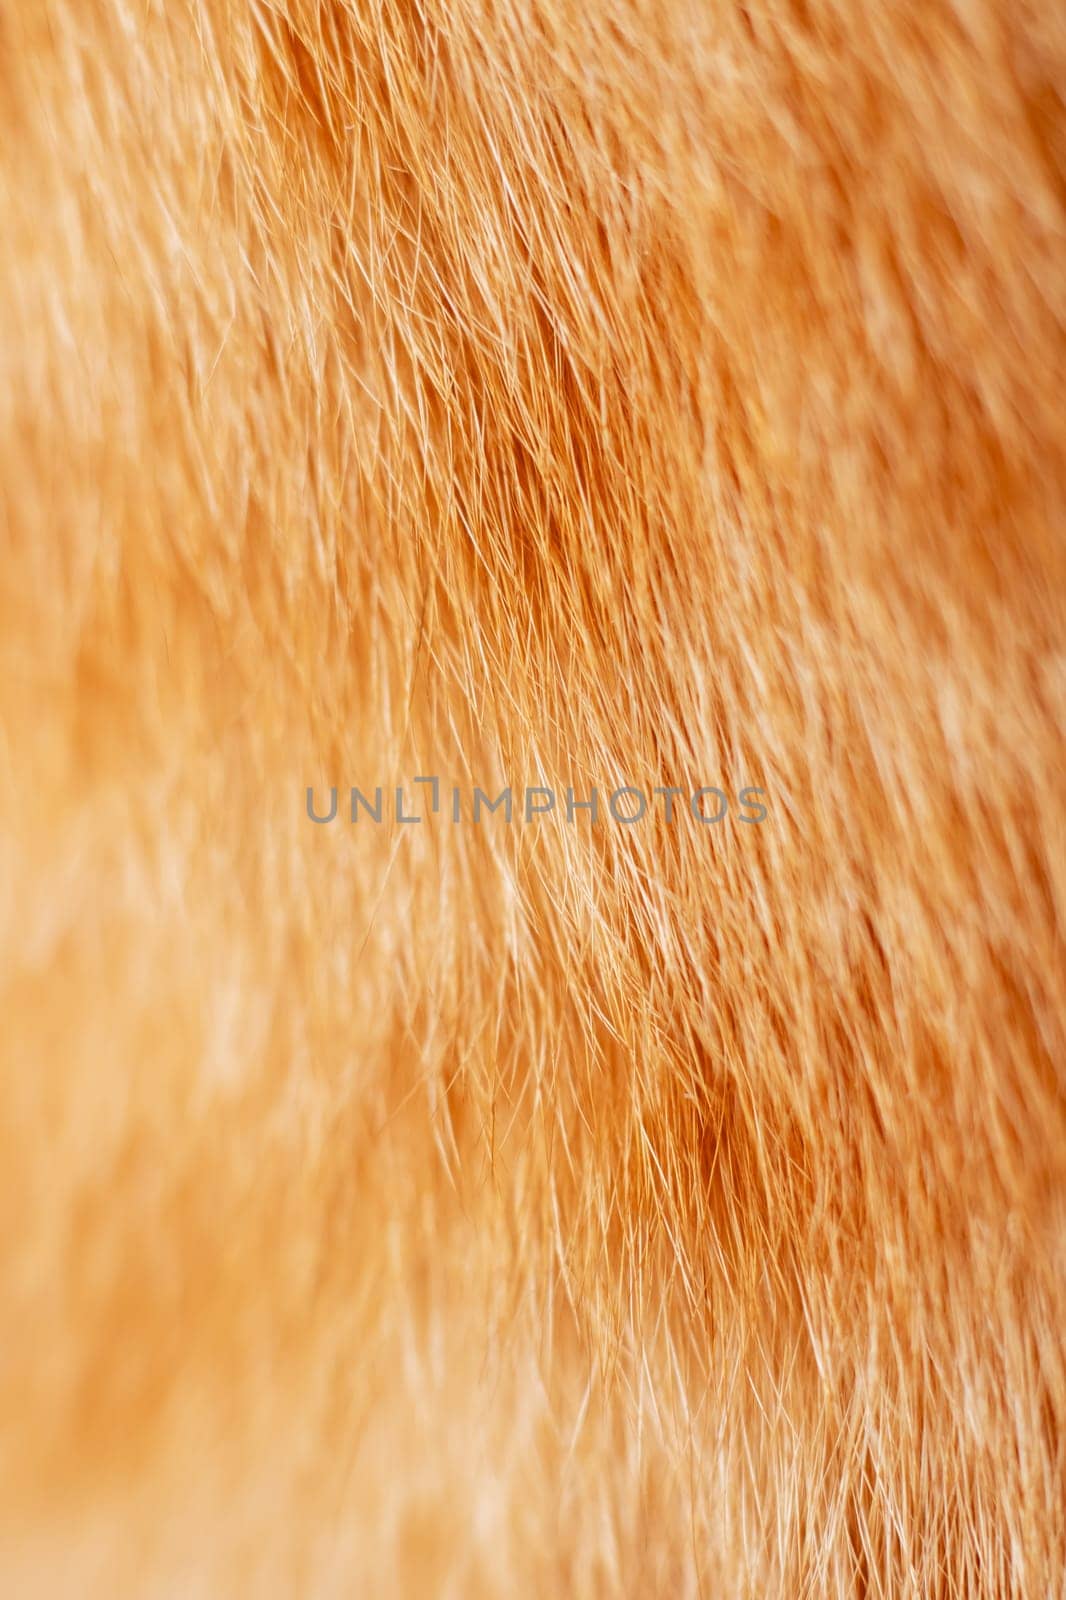 A closeup of a cats fur reveals its texture and pattern close up